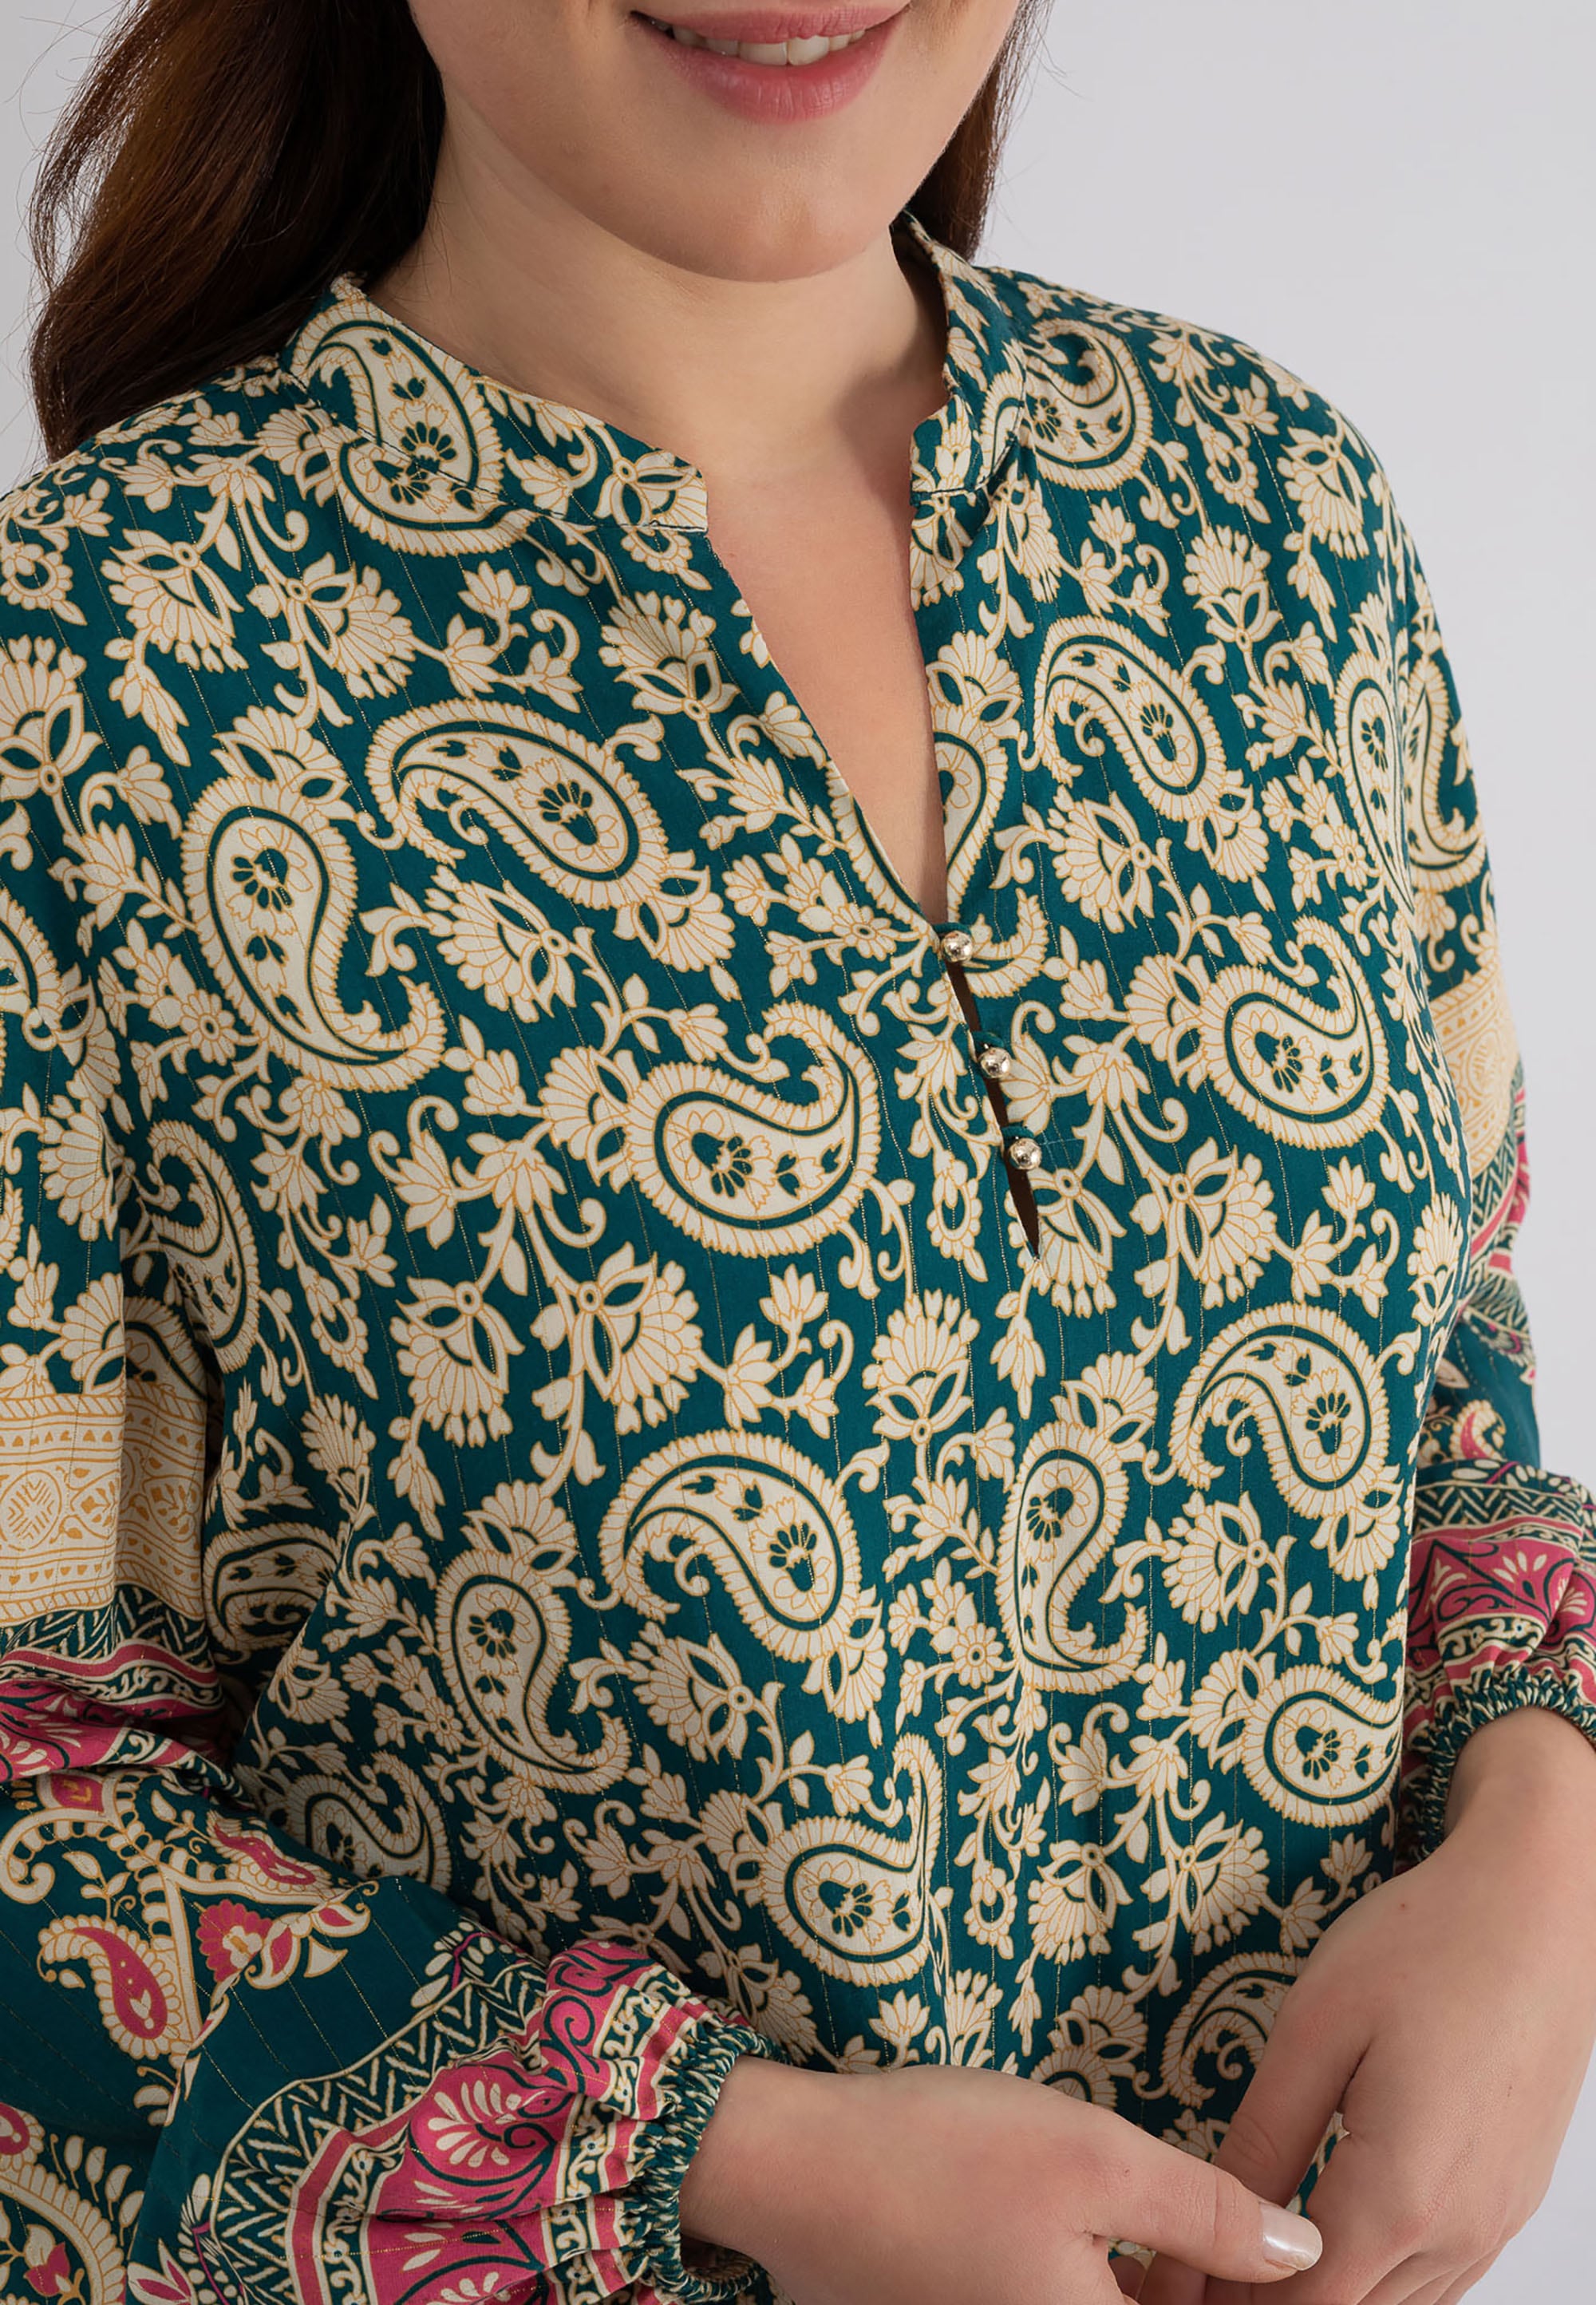 October Klassische Bluse, mit trendigem Paisley-Muster kaufen | BAUR